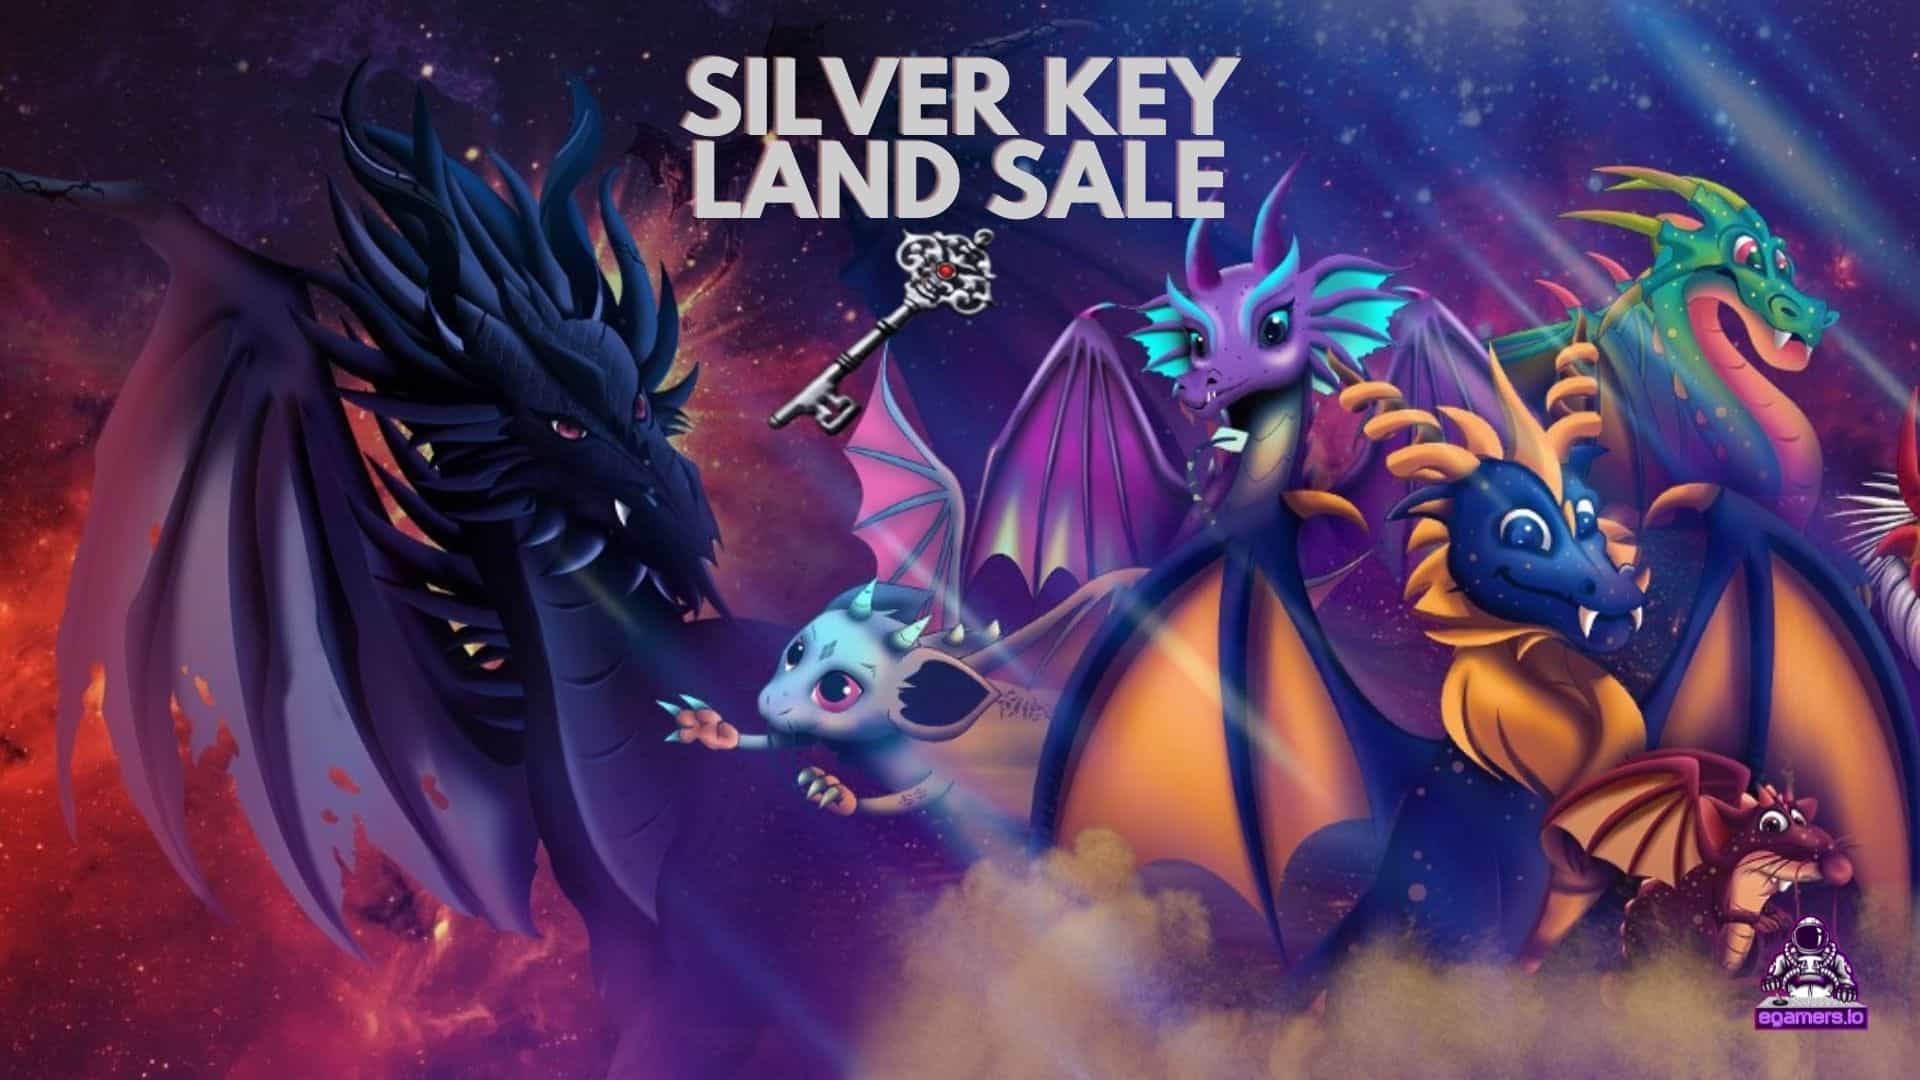 The Silver Key Land Sale That Unlocks Exclusive Benefits…